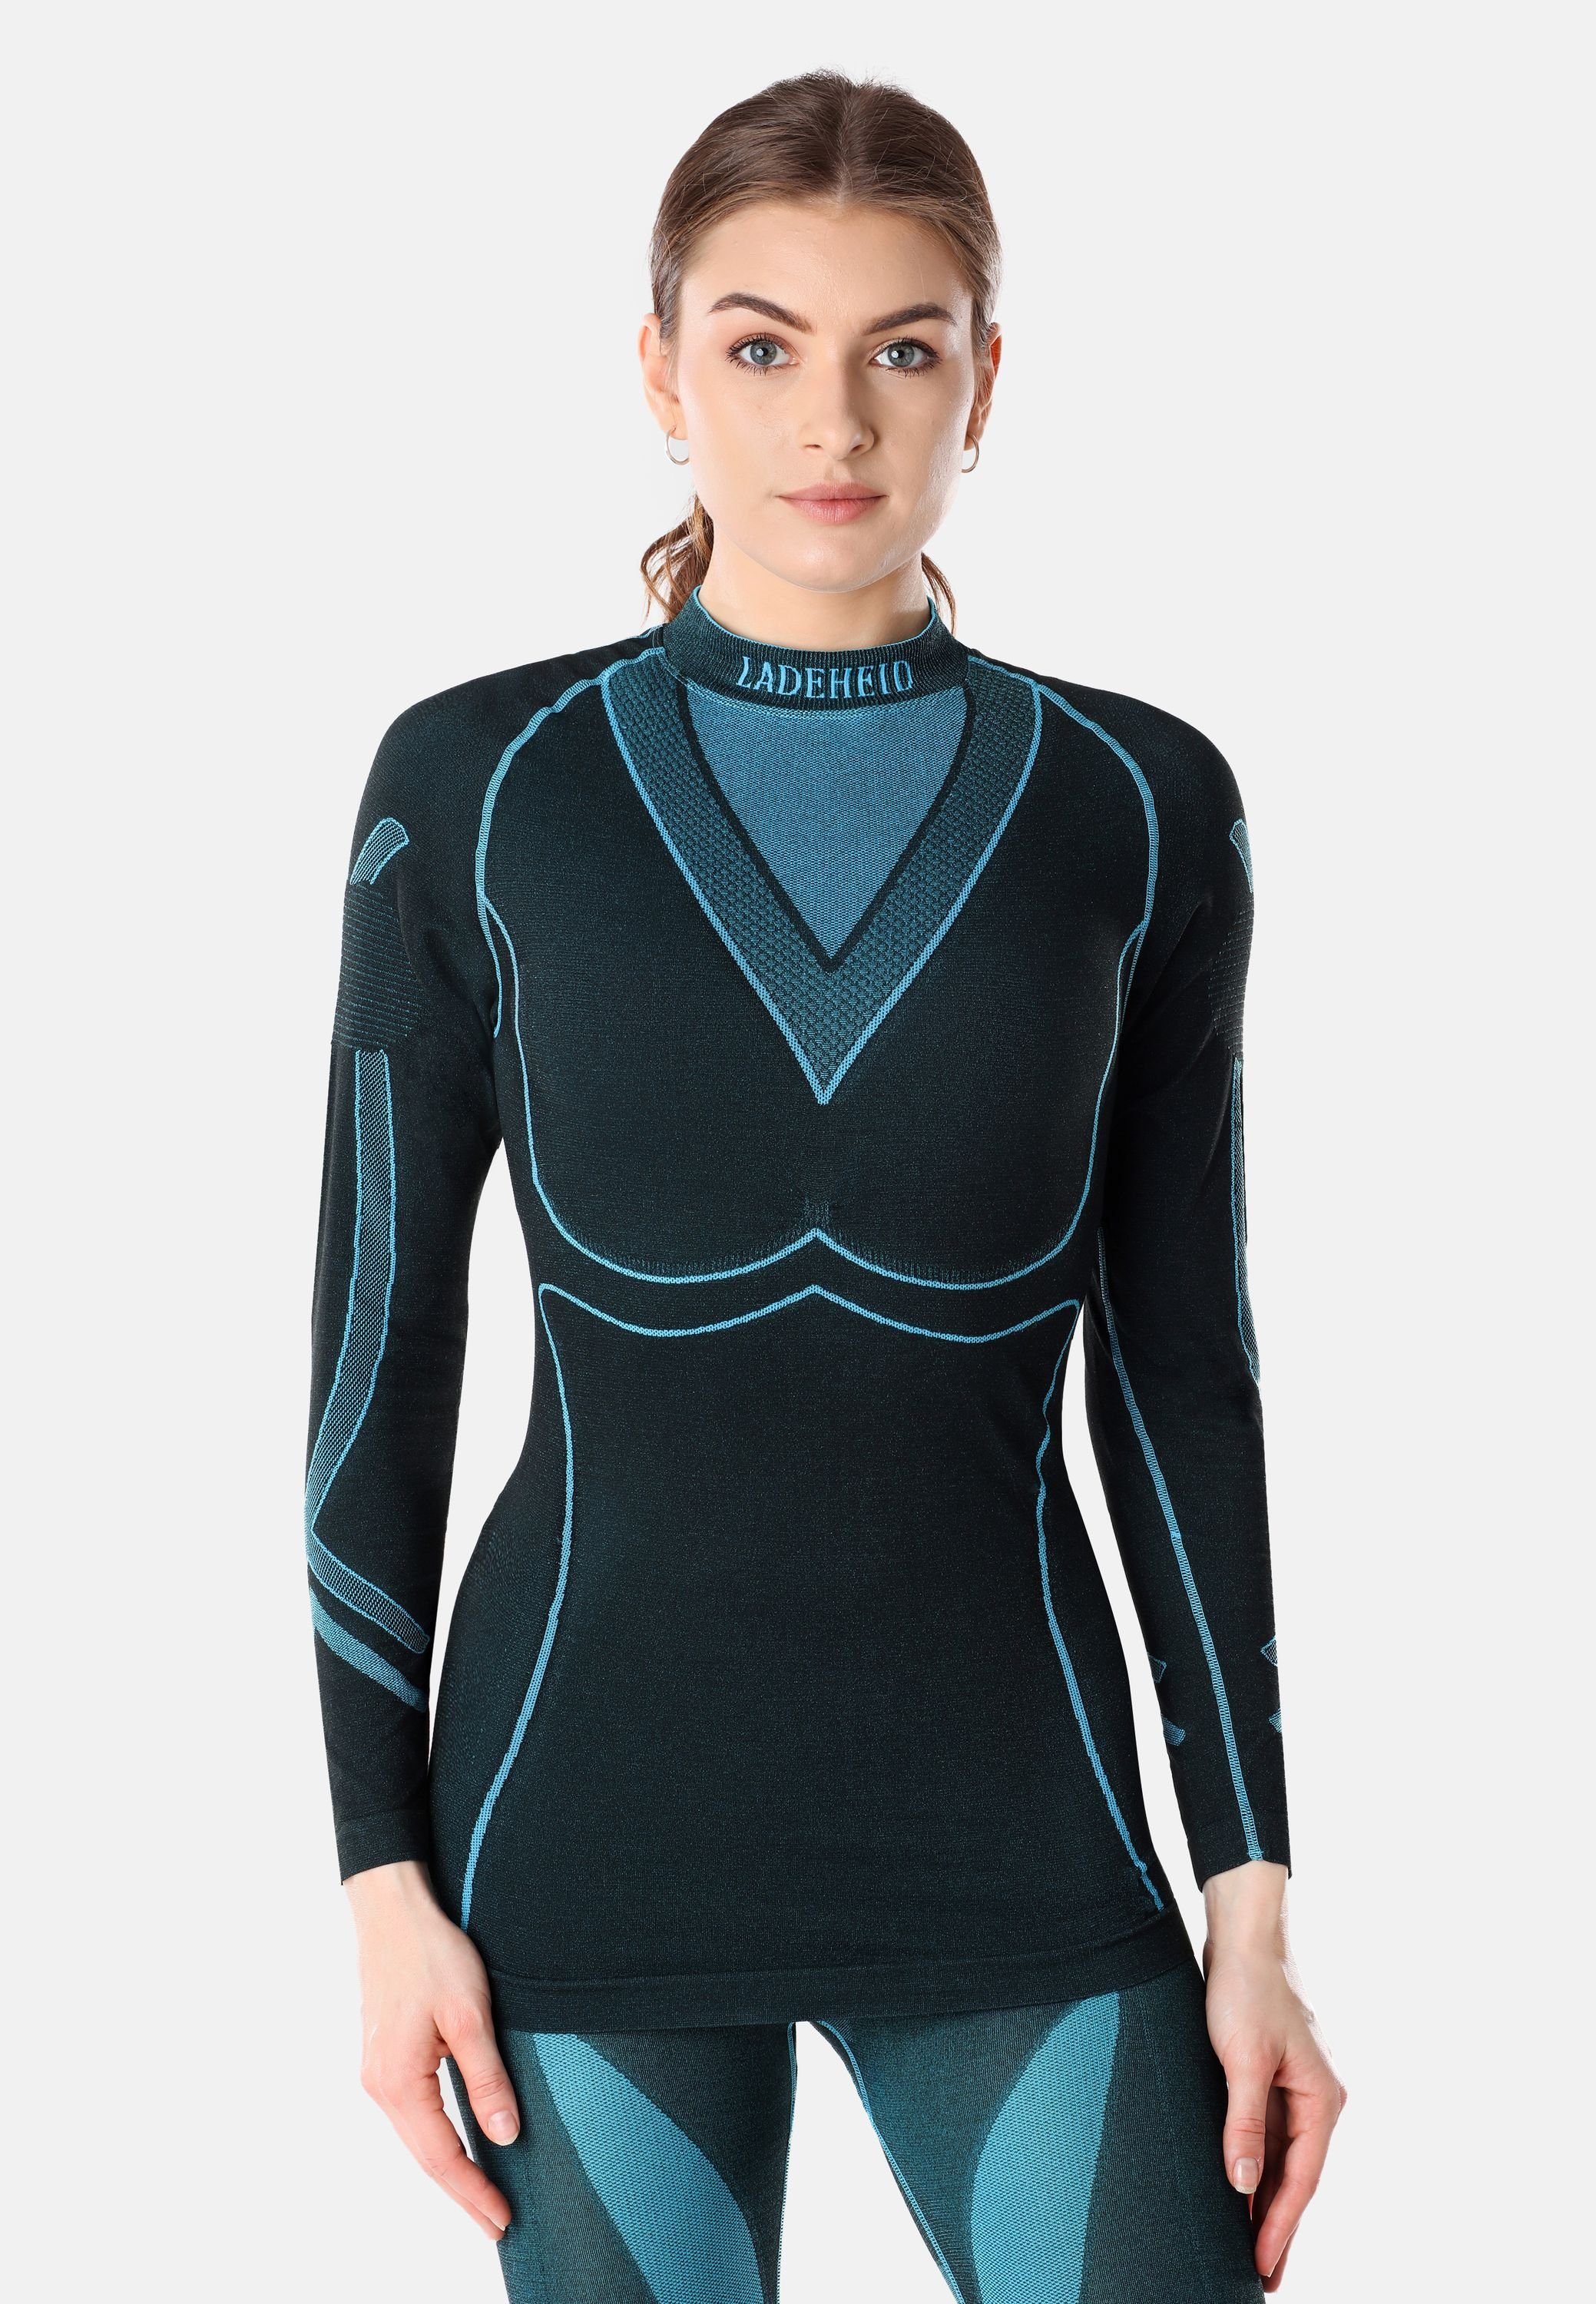 Damen Ladeheid LAGI004 Funktionsunterhemd Funktionsunterwäsche Schwarz/Turquoise Thermoaktiv langarm Shirt